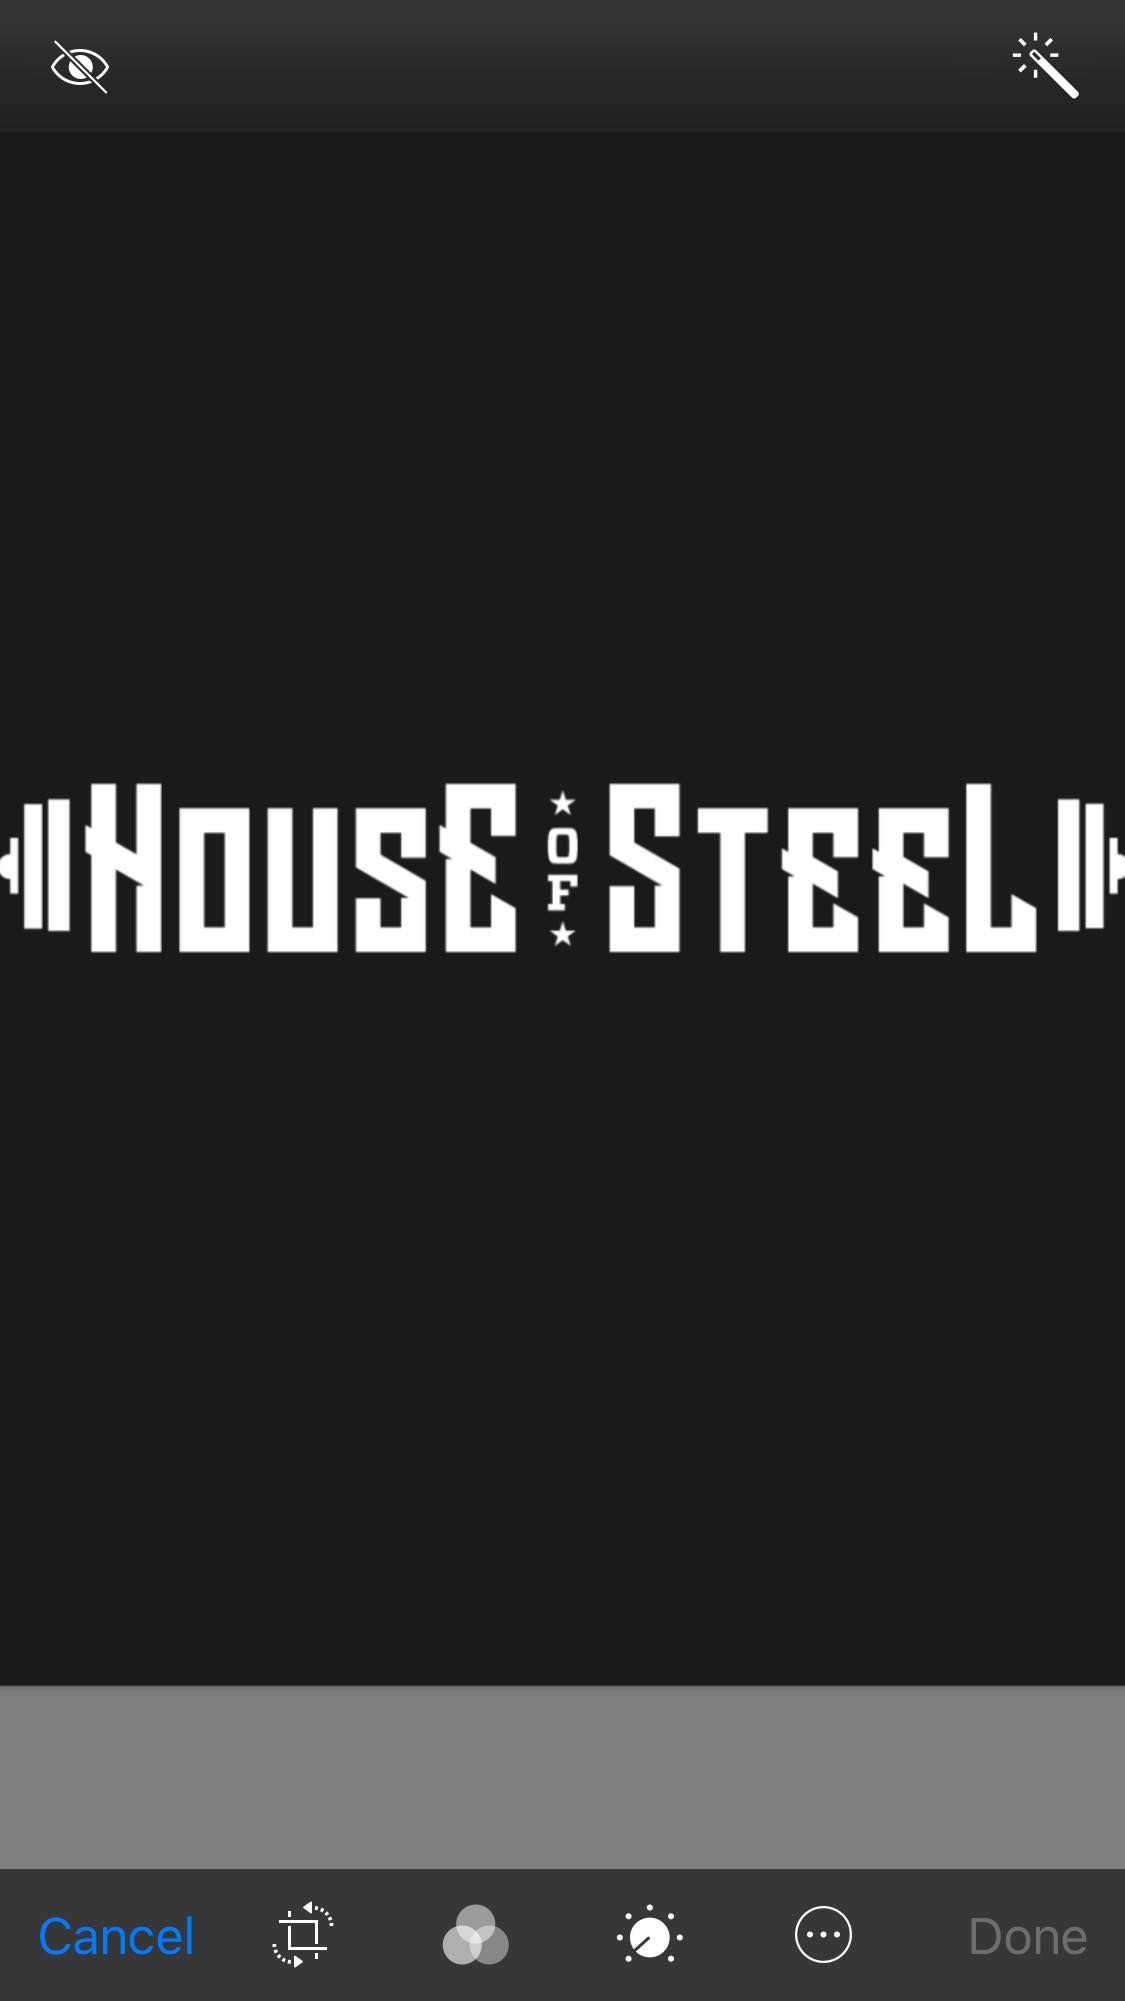 Boca House of Steel